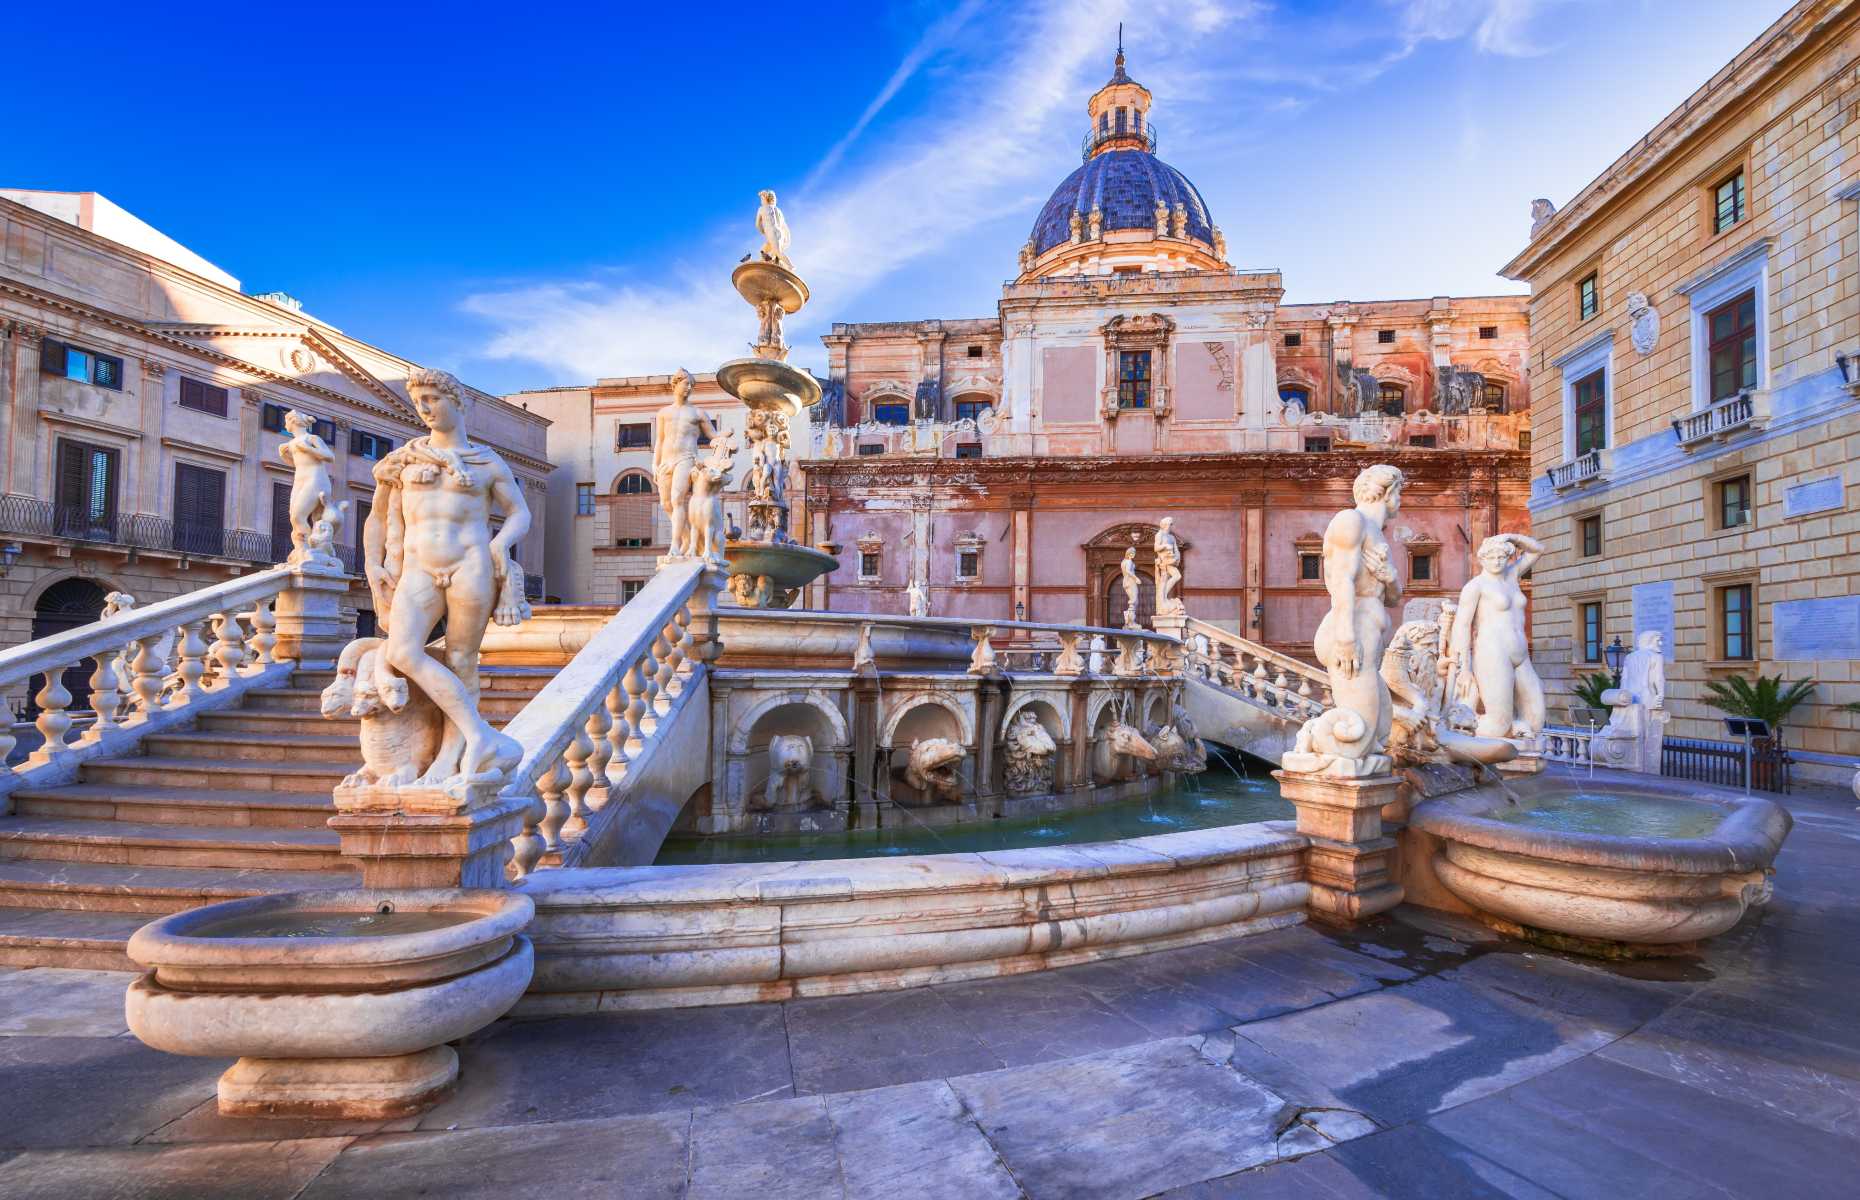 Pretoria Fountain, Palermo (image: Shutterstock/ecstk22)